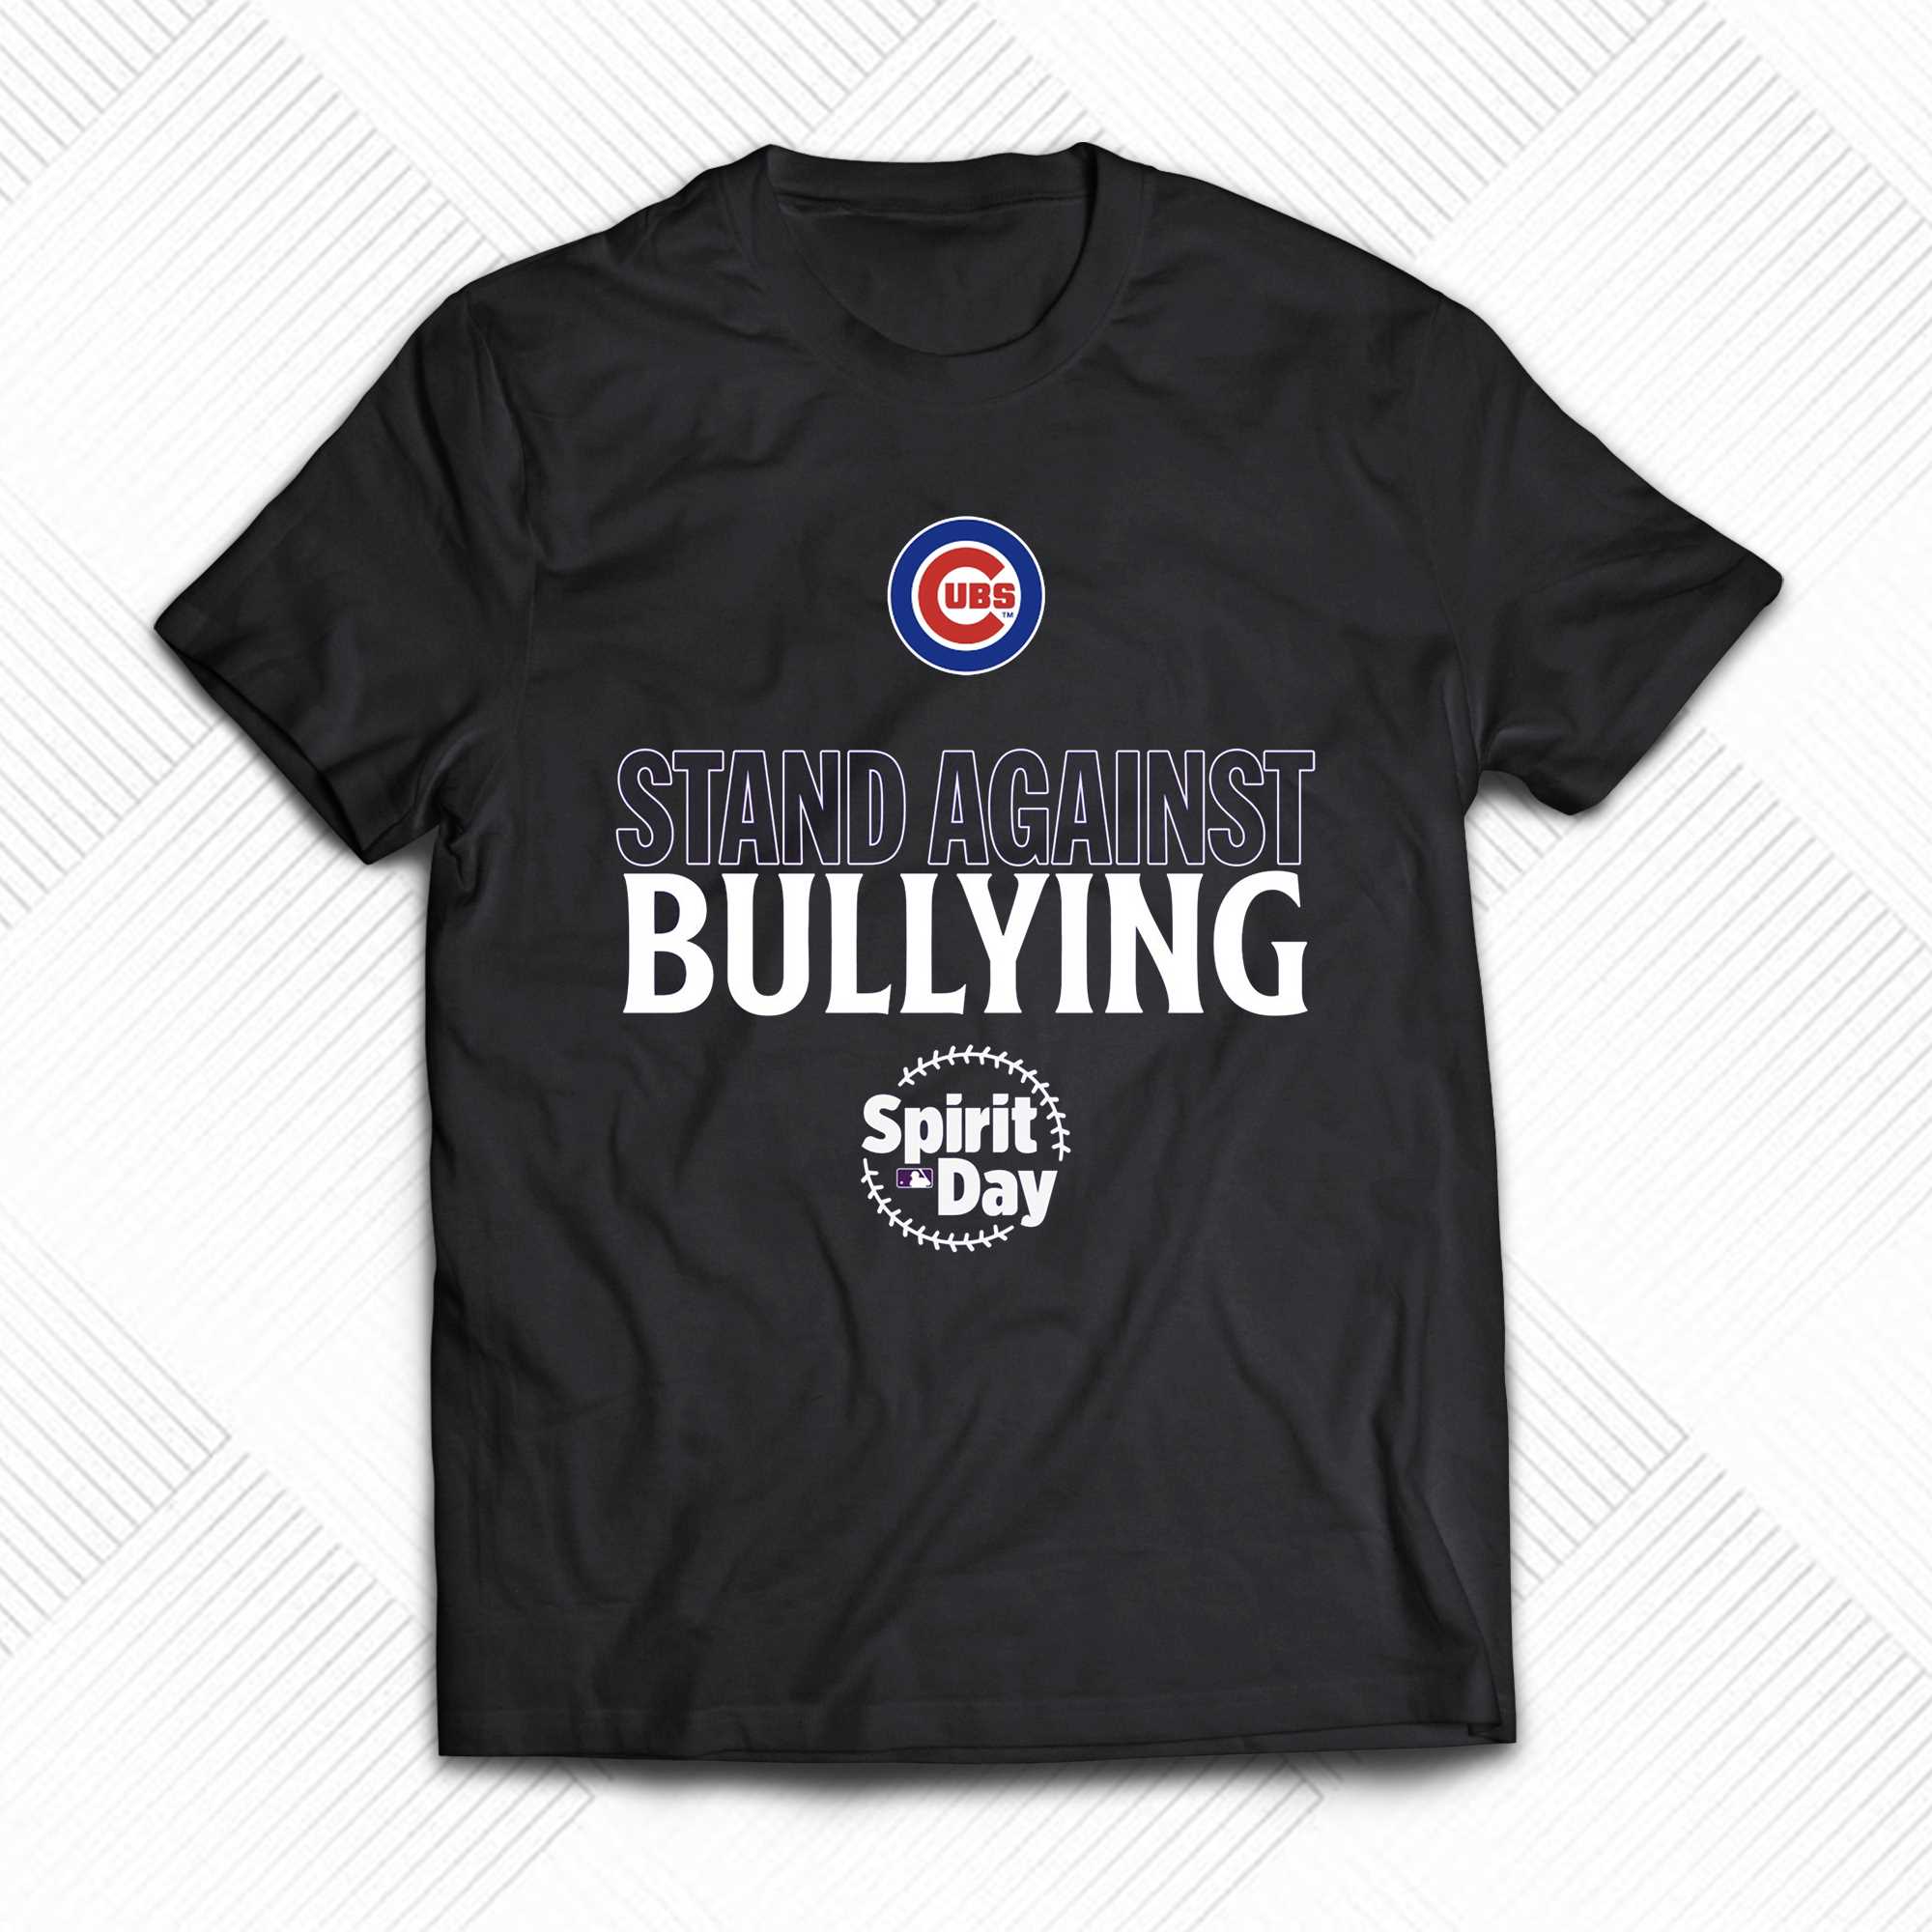 Women's Royal Chicago Cubs Oversized Spirit Jersey V-Neck T-Shirt